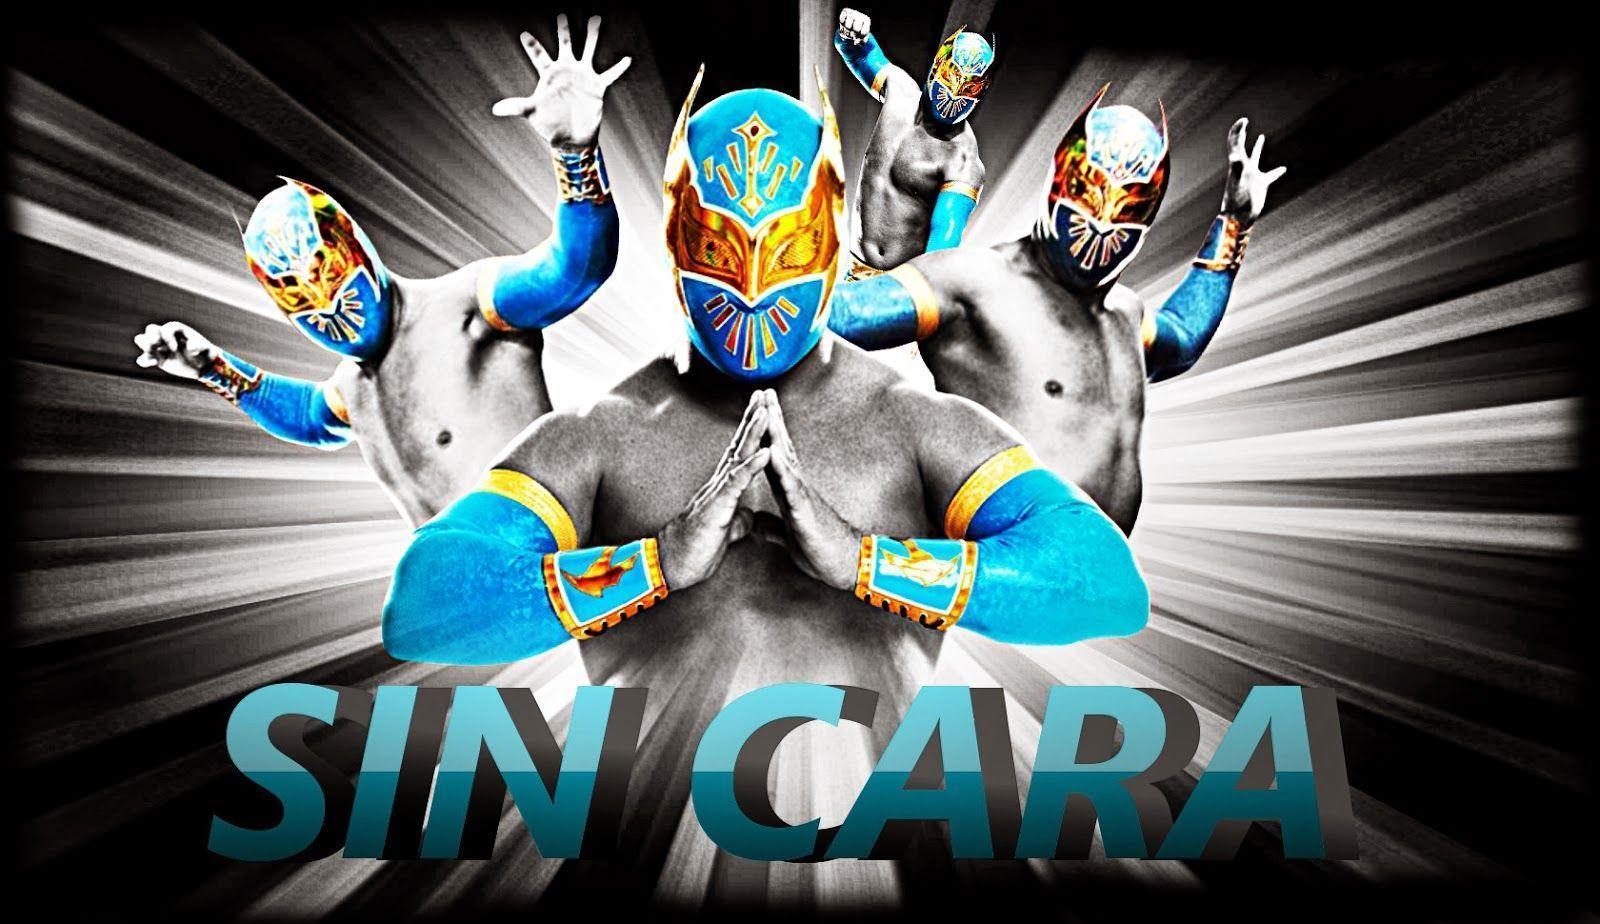 Sin Cara HD Wallpaper Free Download. WWE HD WALLPAPER FREE DOWNLOAD